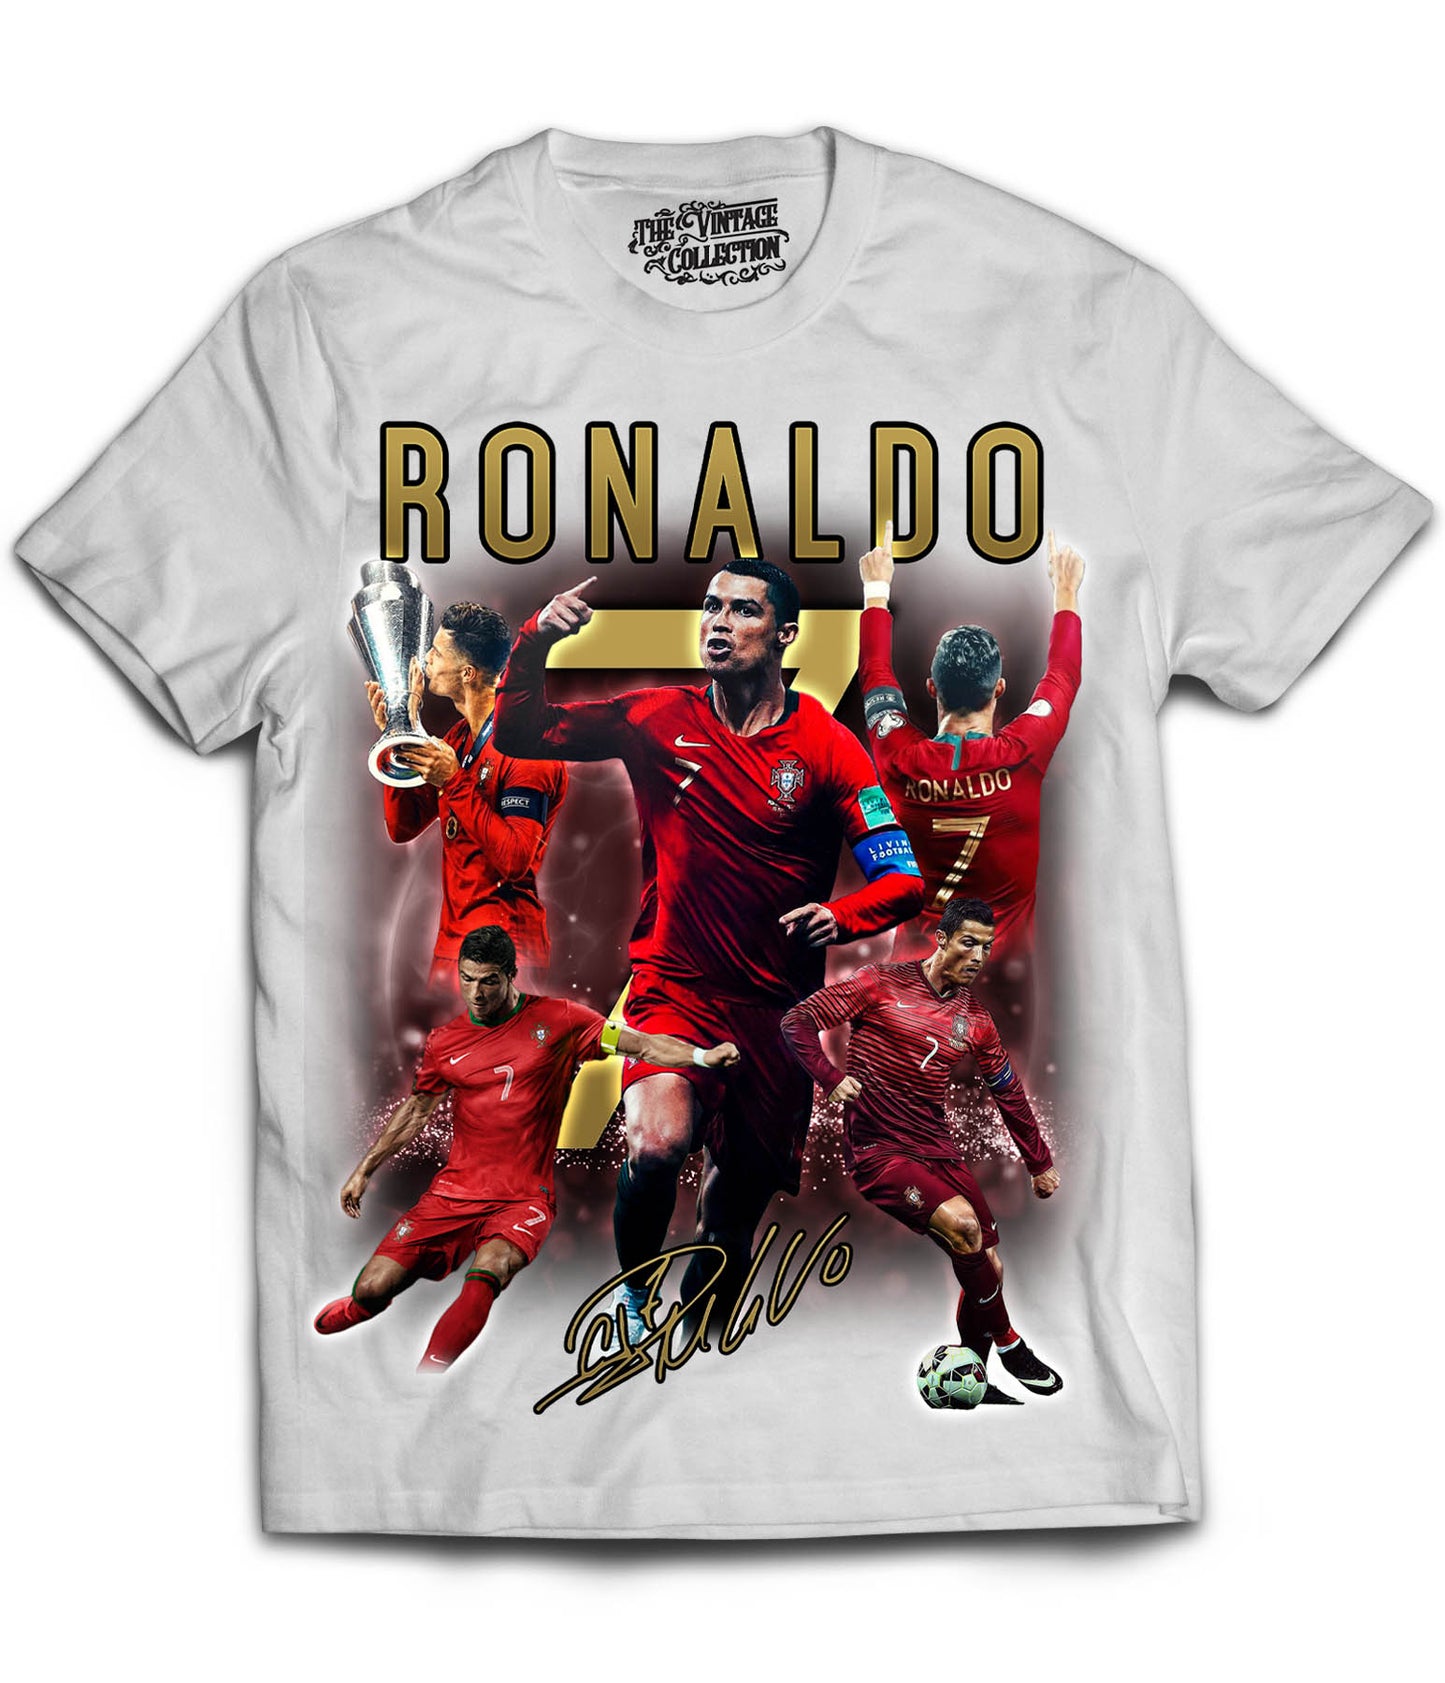 Ronaldo Tribute Shirt (White)